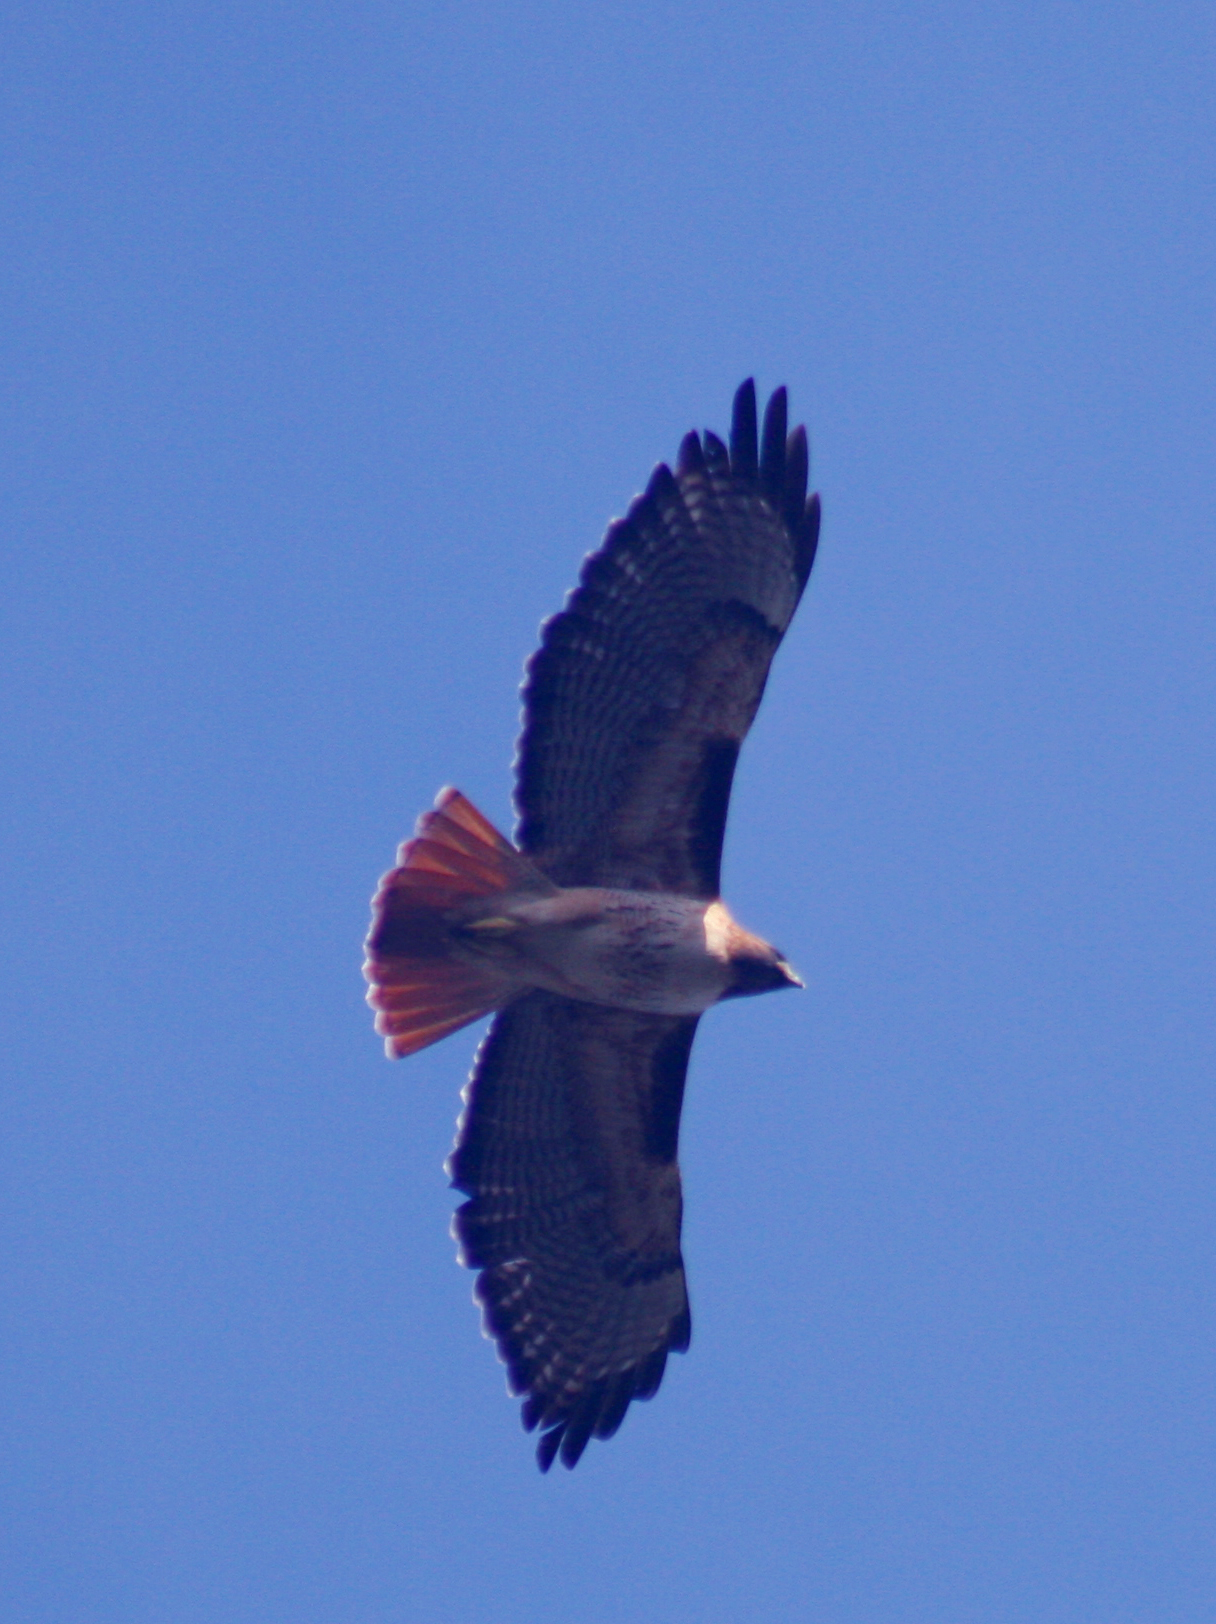 http://upload.wikimedia.org/wikipedia/commons/6/62/Red-tailed_hawk_in_flight.jpg